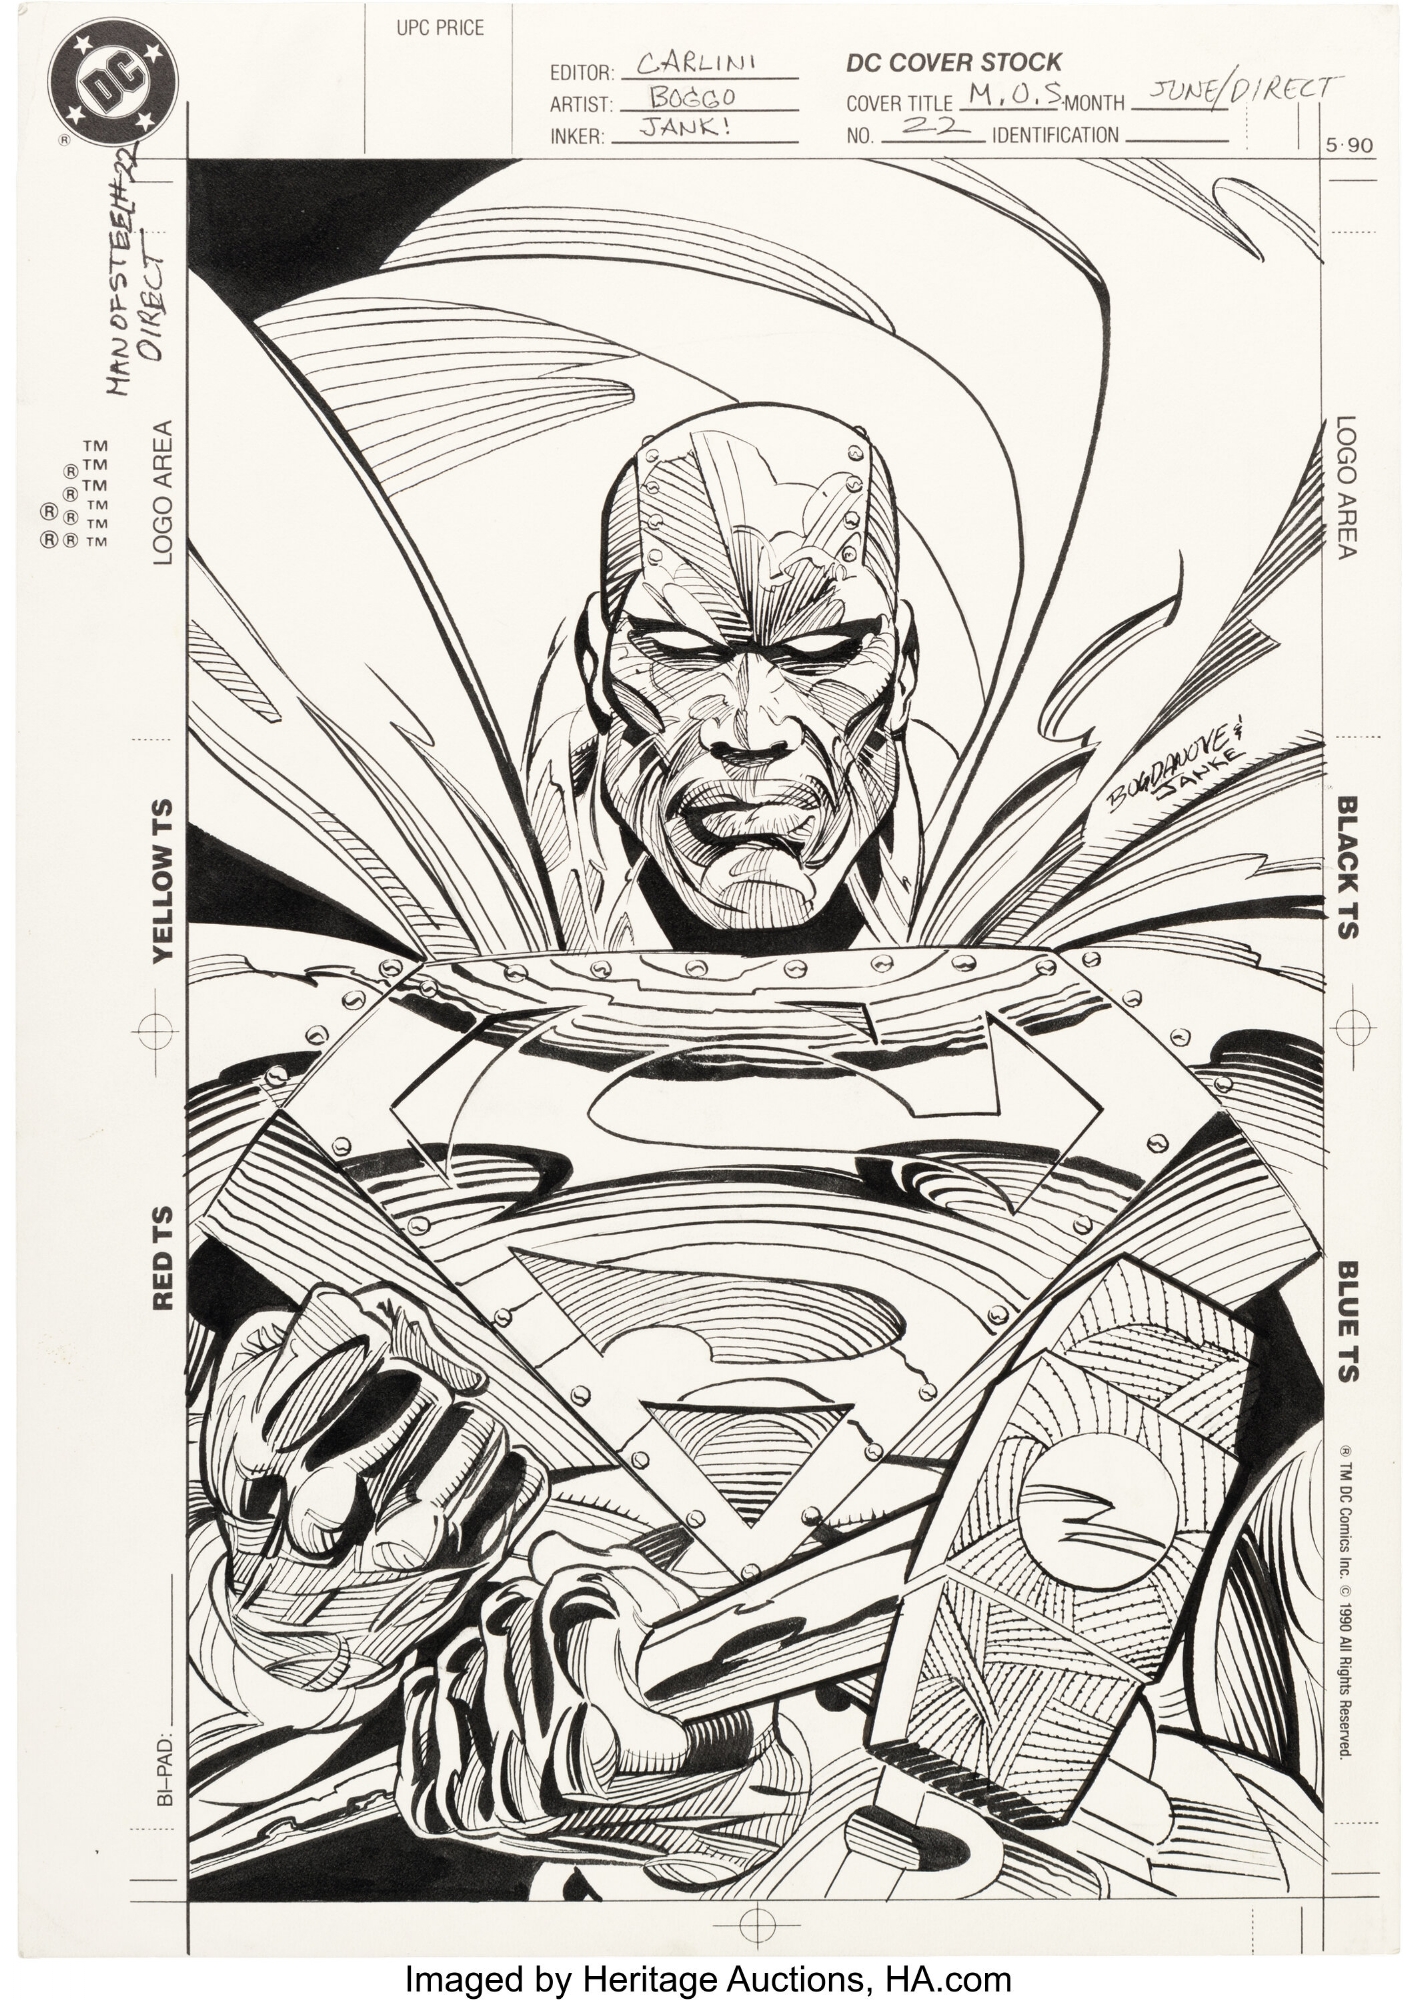 SUPERMAN Art, Man of Steel, DC Artwork